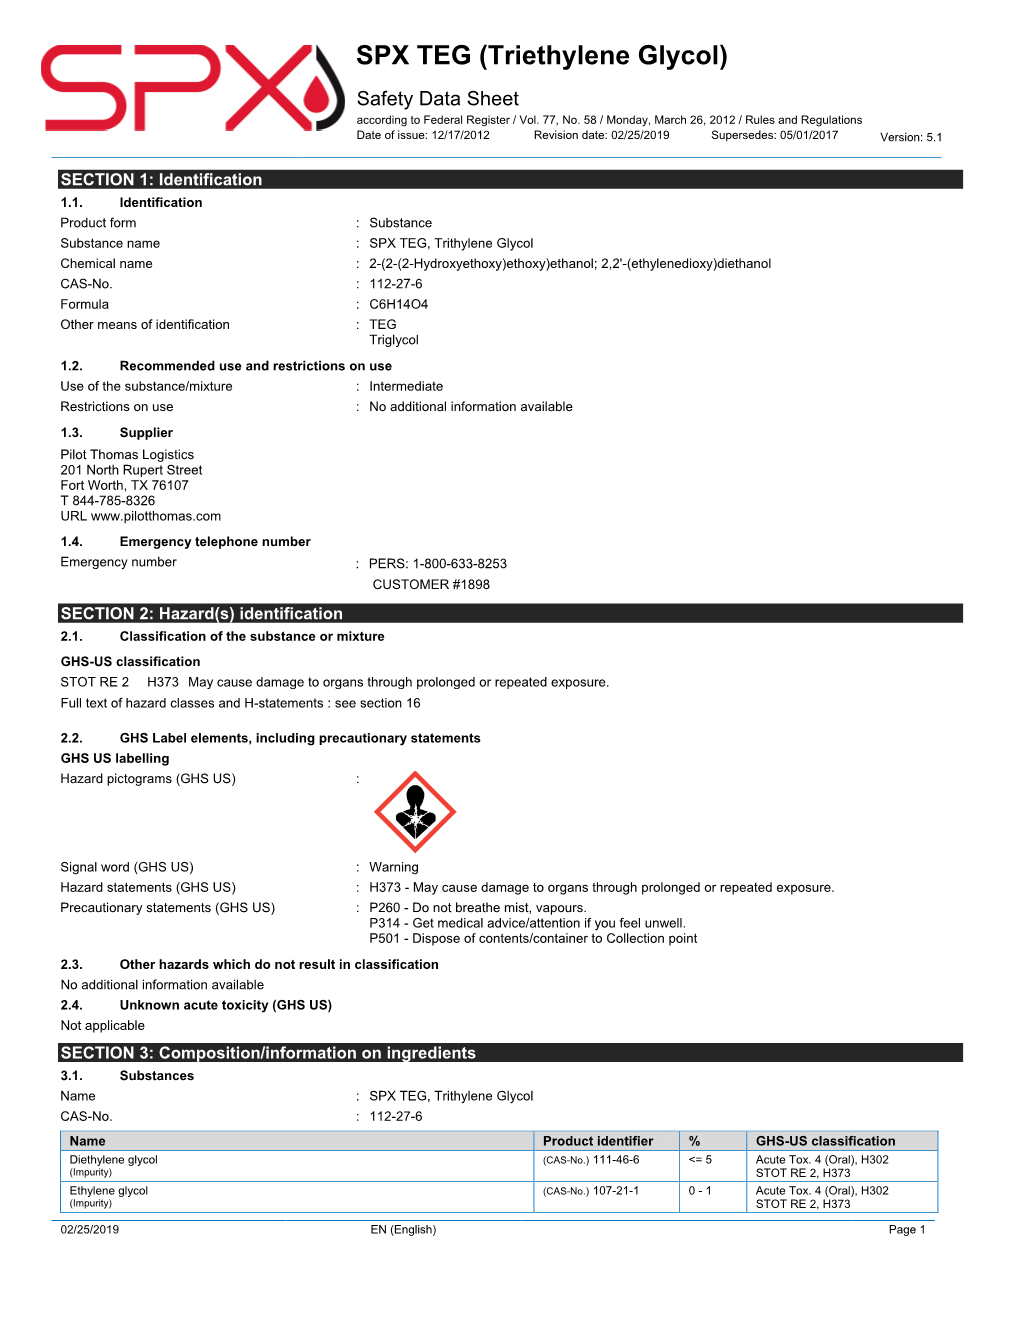 SPX TEG (Triethylene Glycol) Safety Data Sheet According to Federal Register / Vol